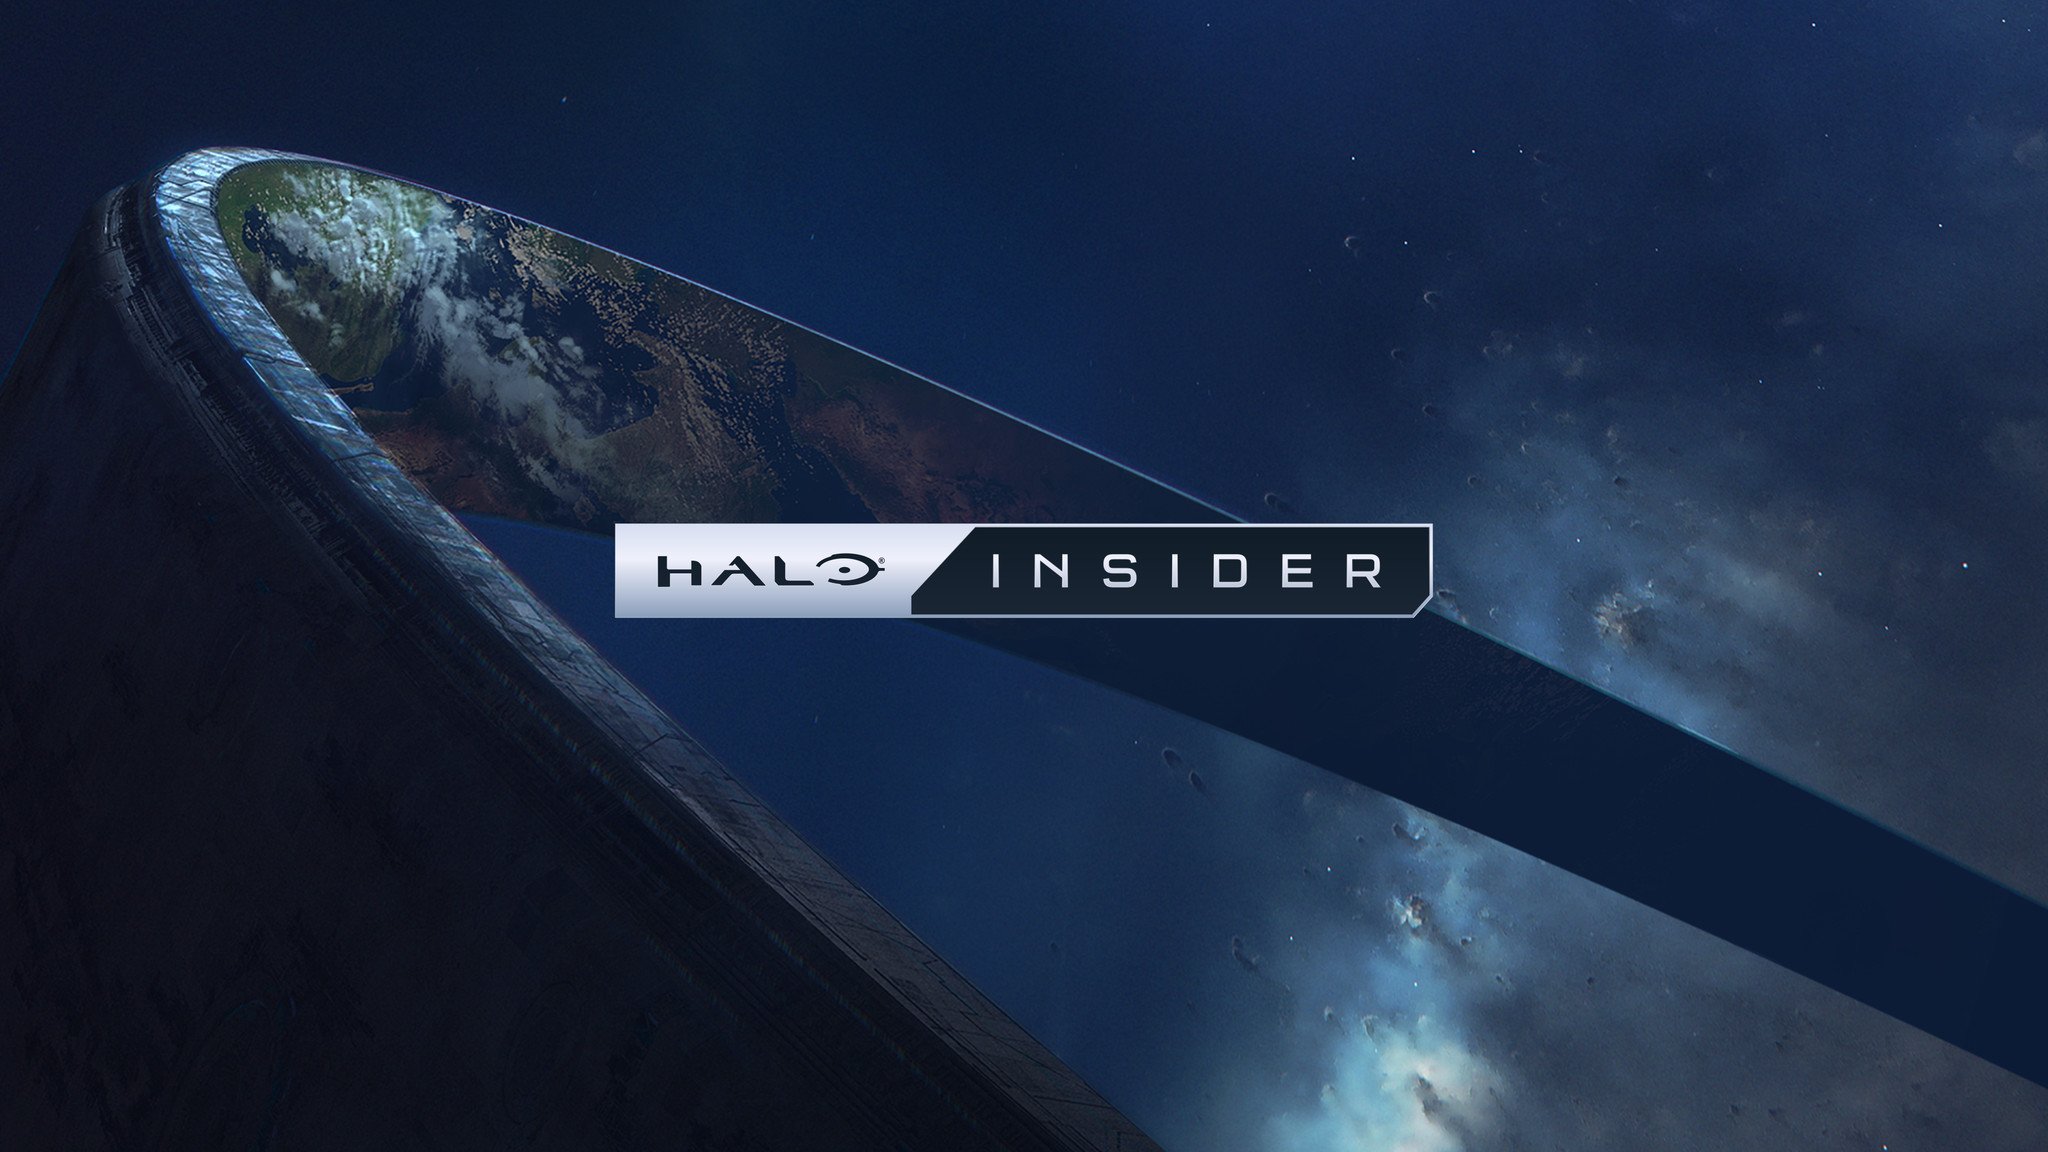 The Halo Insider Program.